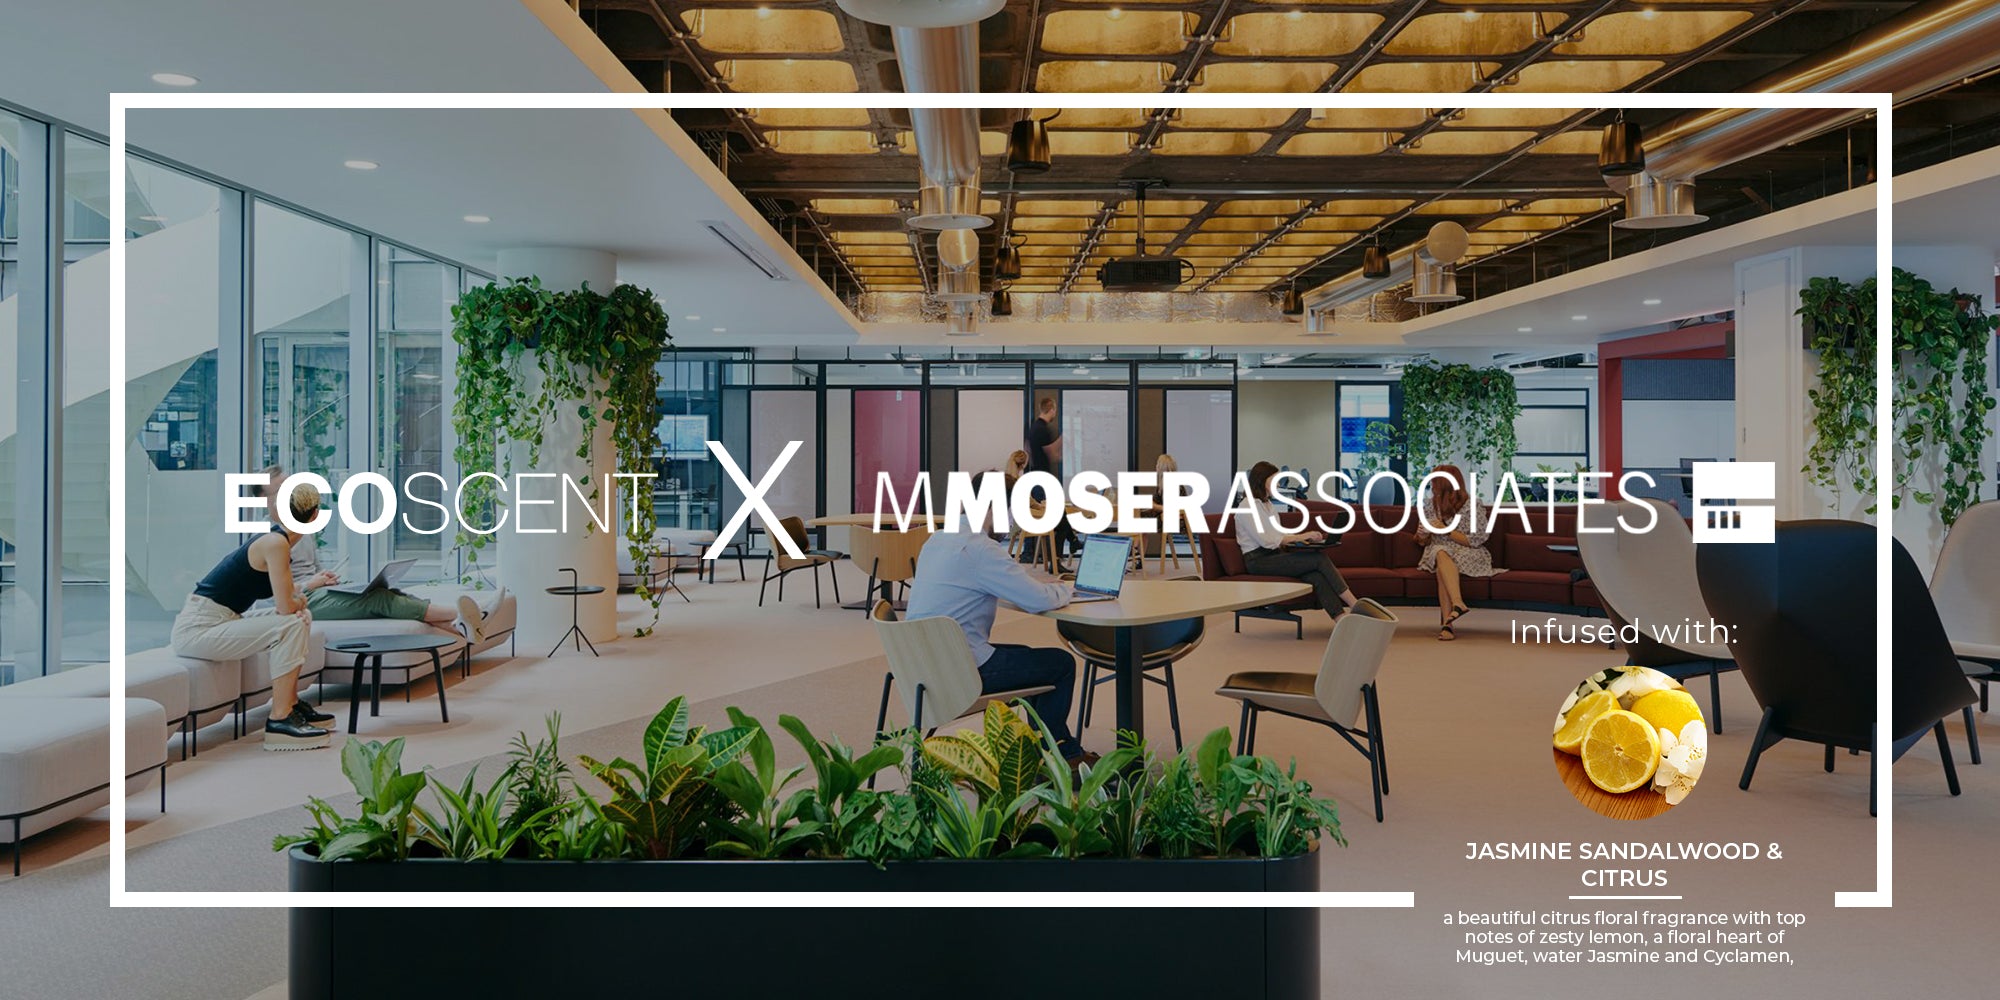 M Moser Associates